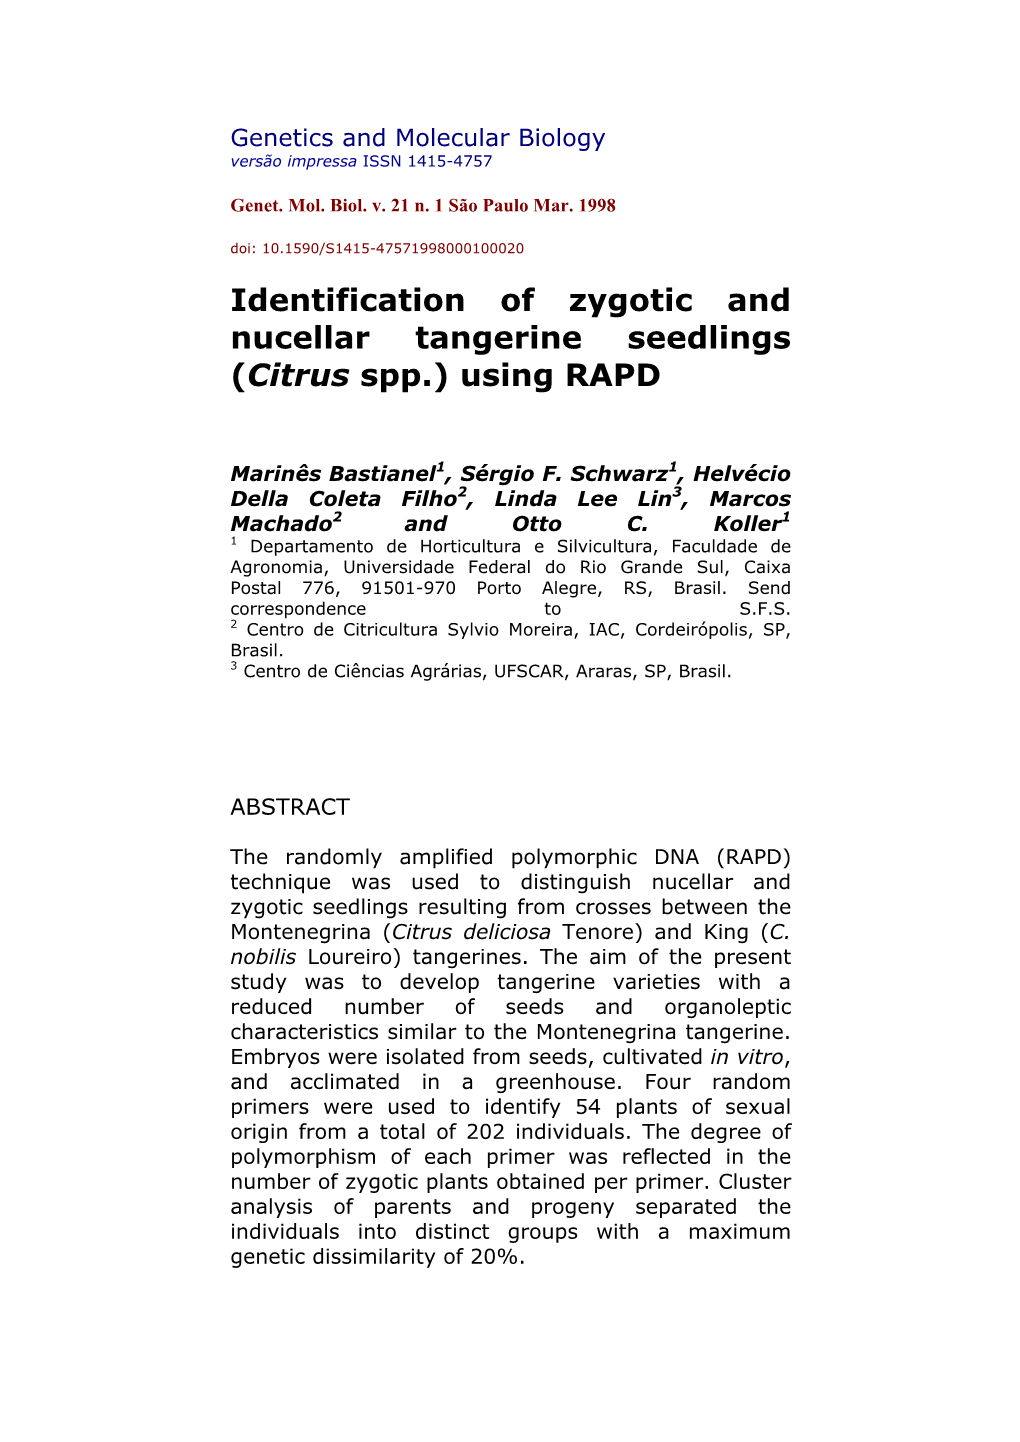 Identification of Zygotic and Nucellar Tangerine Seedlings (Citrus Spp.) Using RAPD